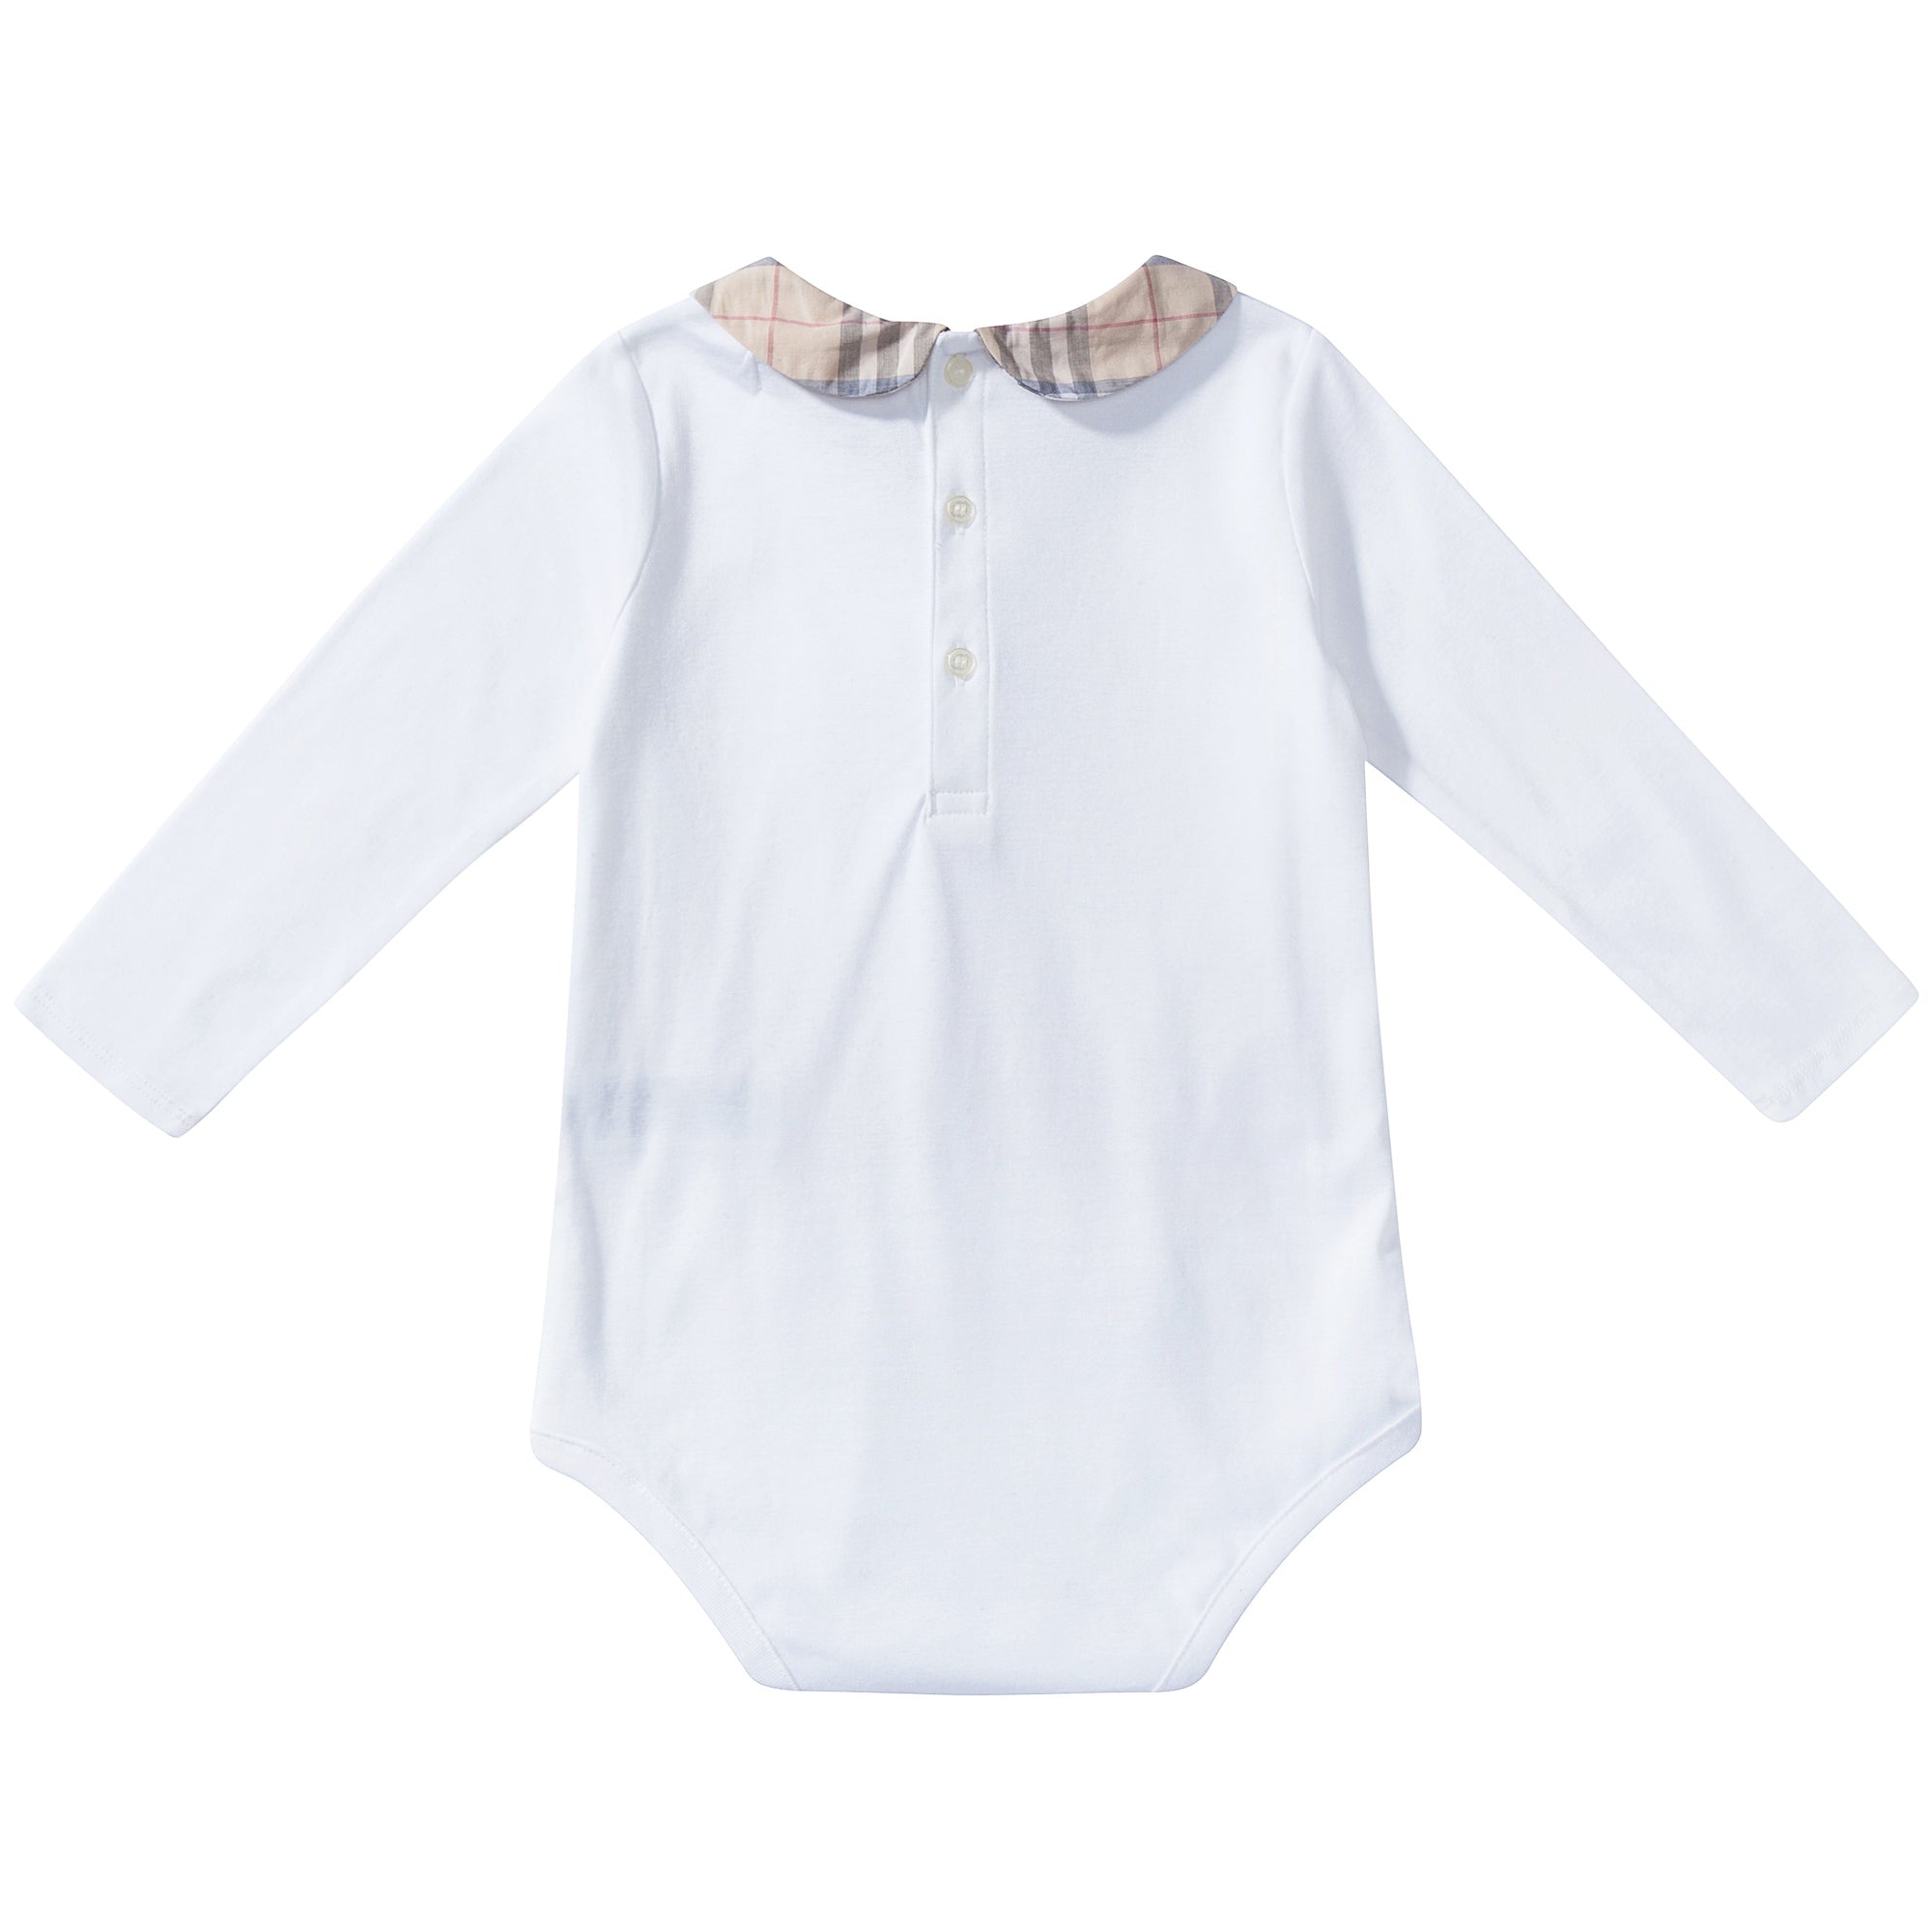 Baby  White   Cotton  Babysuit